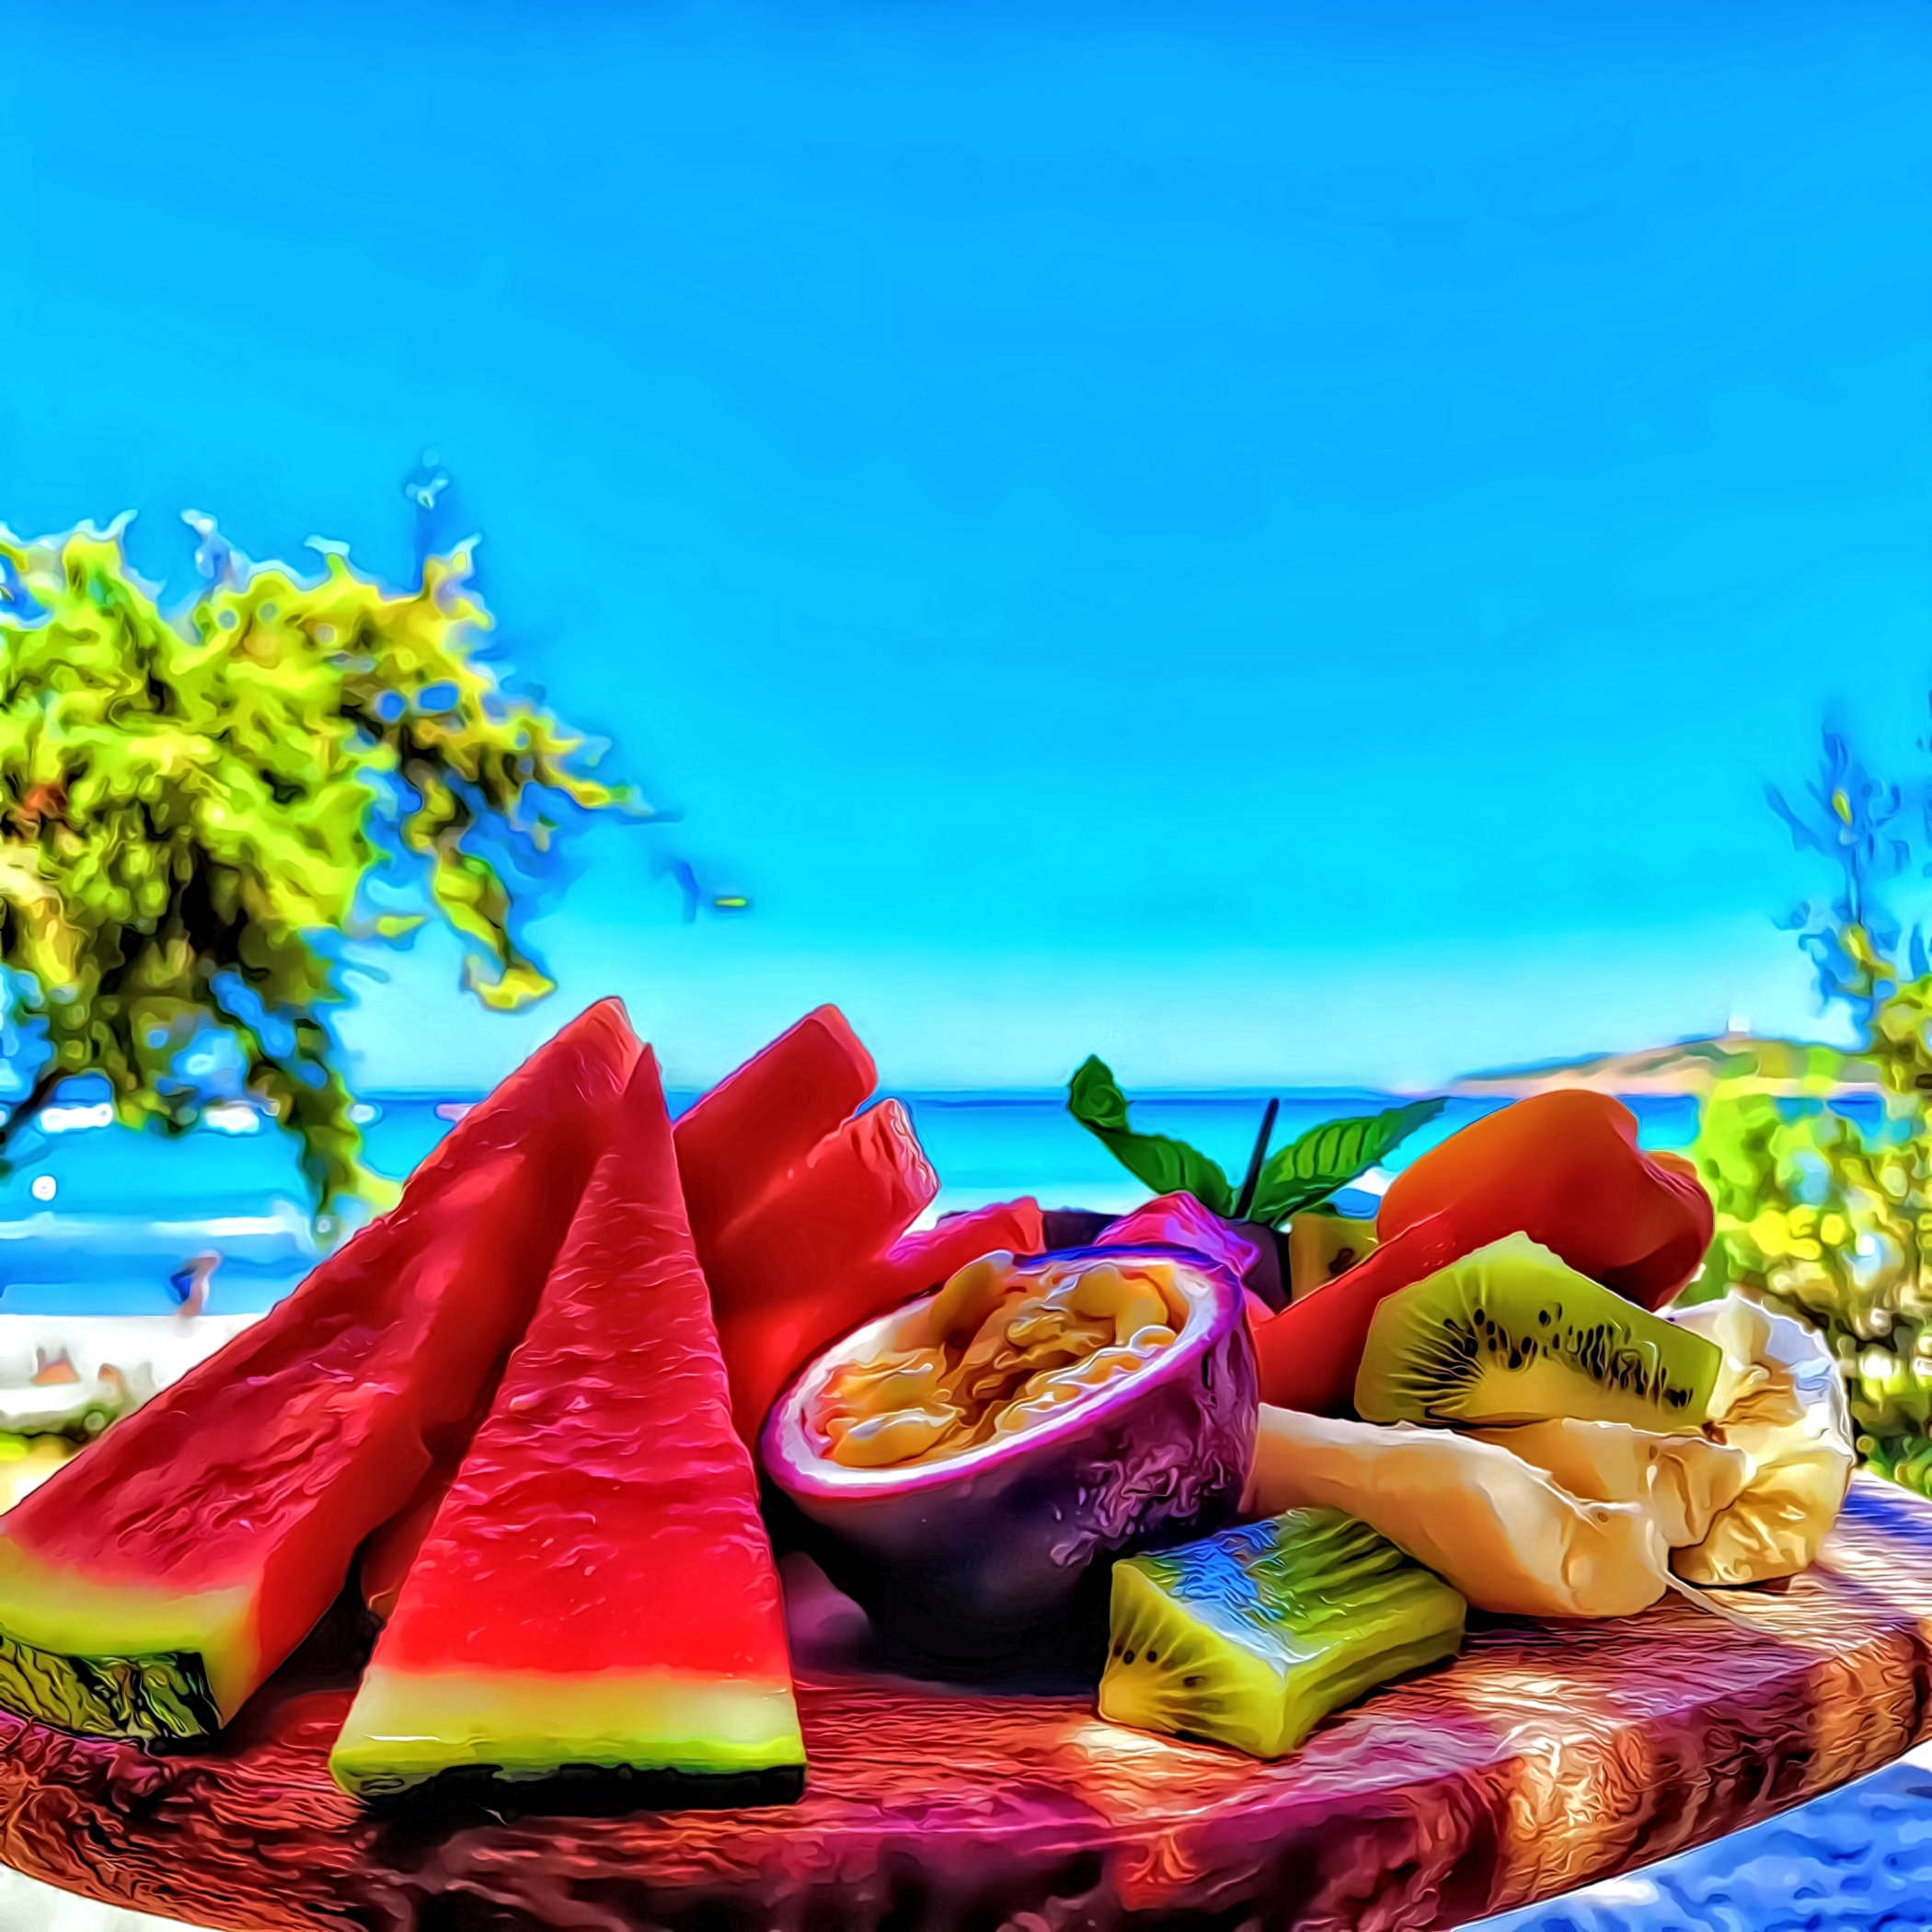 Artwork Digital Art Illustration DeviantArt Colorful Sky Still Life Watermelons Kiwi Fruit Sea Beach 2100x2100